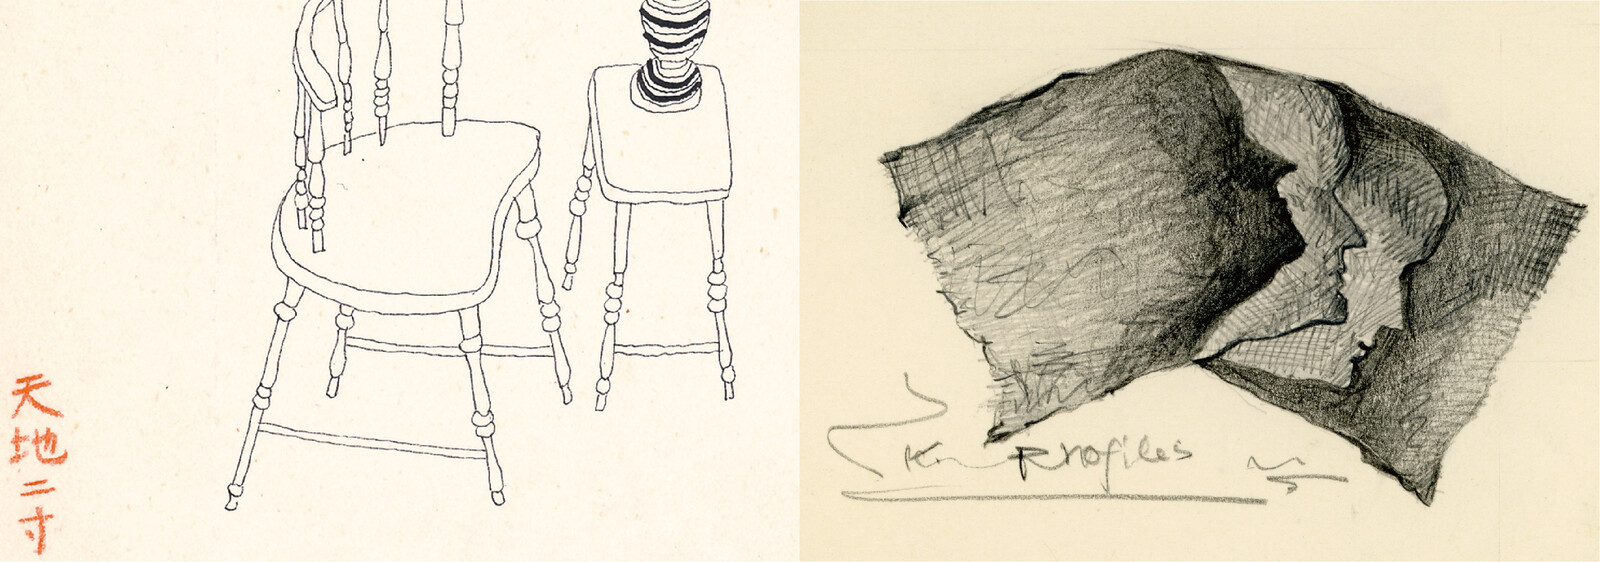 Left(Top): HANAMORI Yasuji, original illustration depicting a chair and lamp, <span class="italic">Kurashi-no-techo</span> (Vol. 1, No. 5, October 1, 1949)　Right(Bottom): USAMI Keiji, original illustration depicting profiles, <span class="italic">Sekai</span> (No. 363, February 1, 1976)